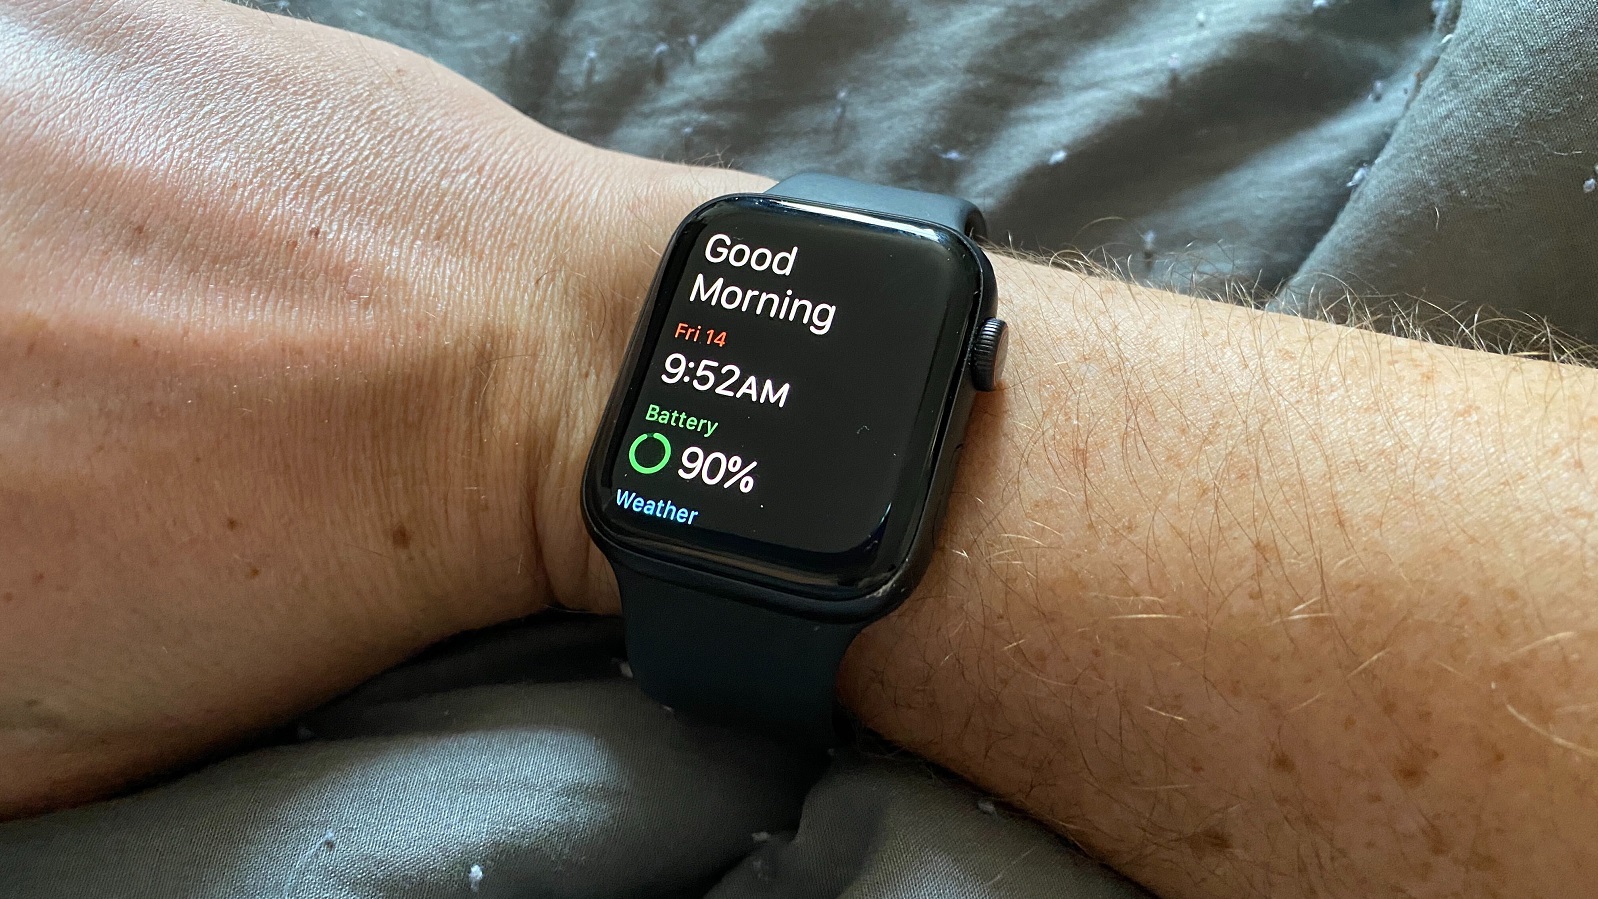 Sleep tracking on the Apple Watch 5